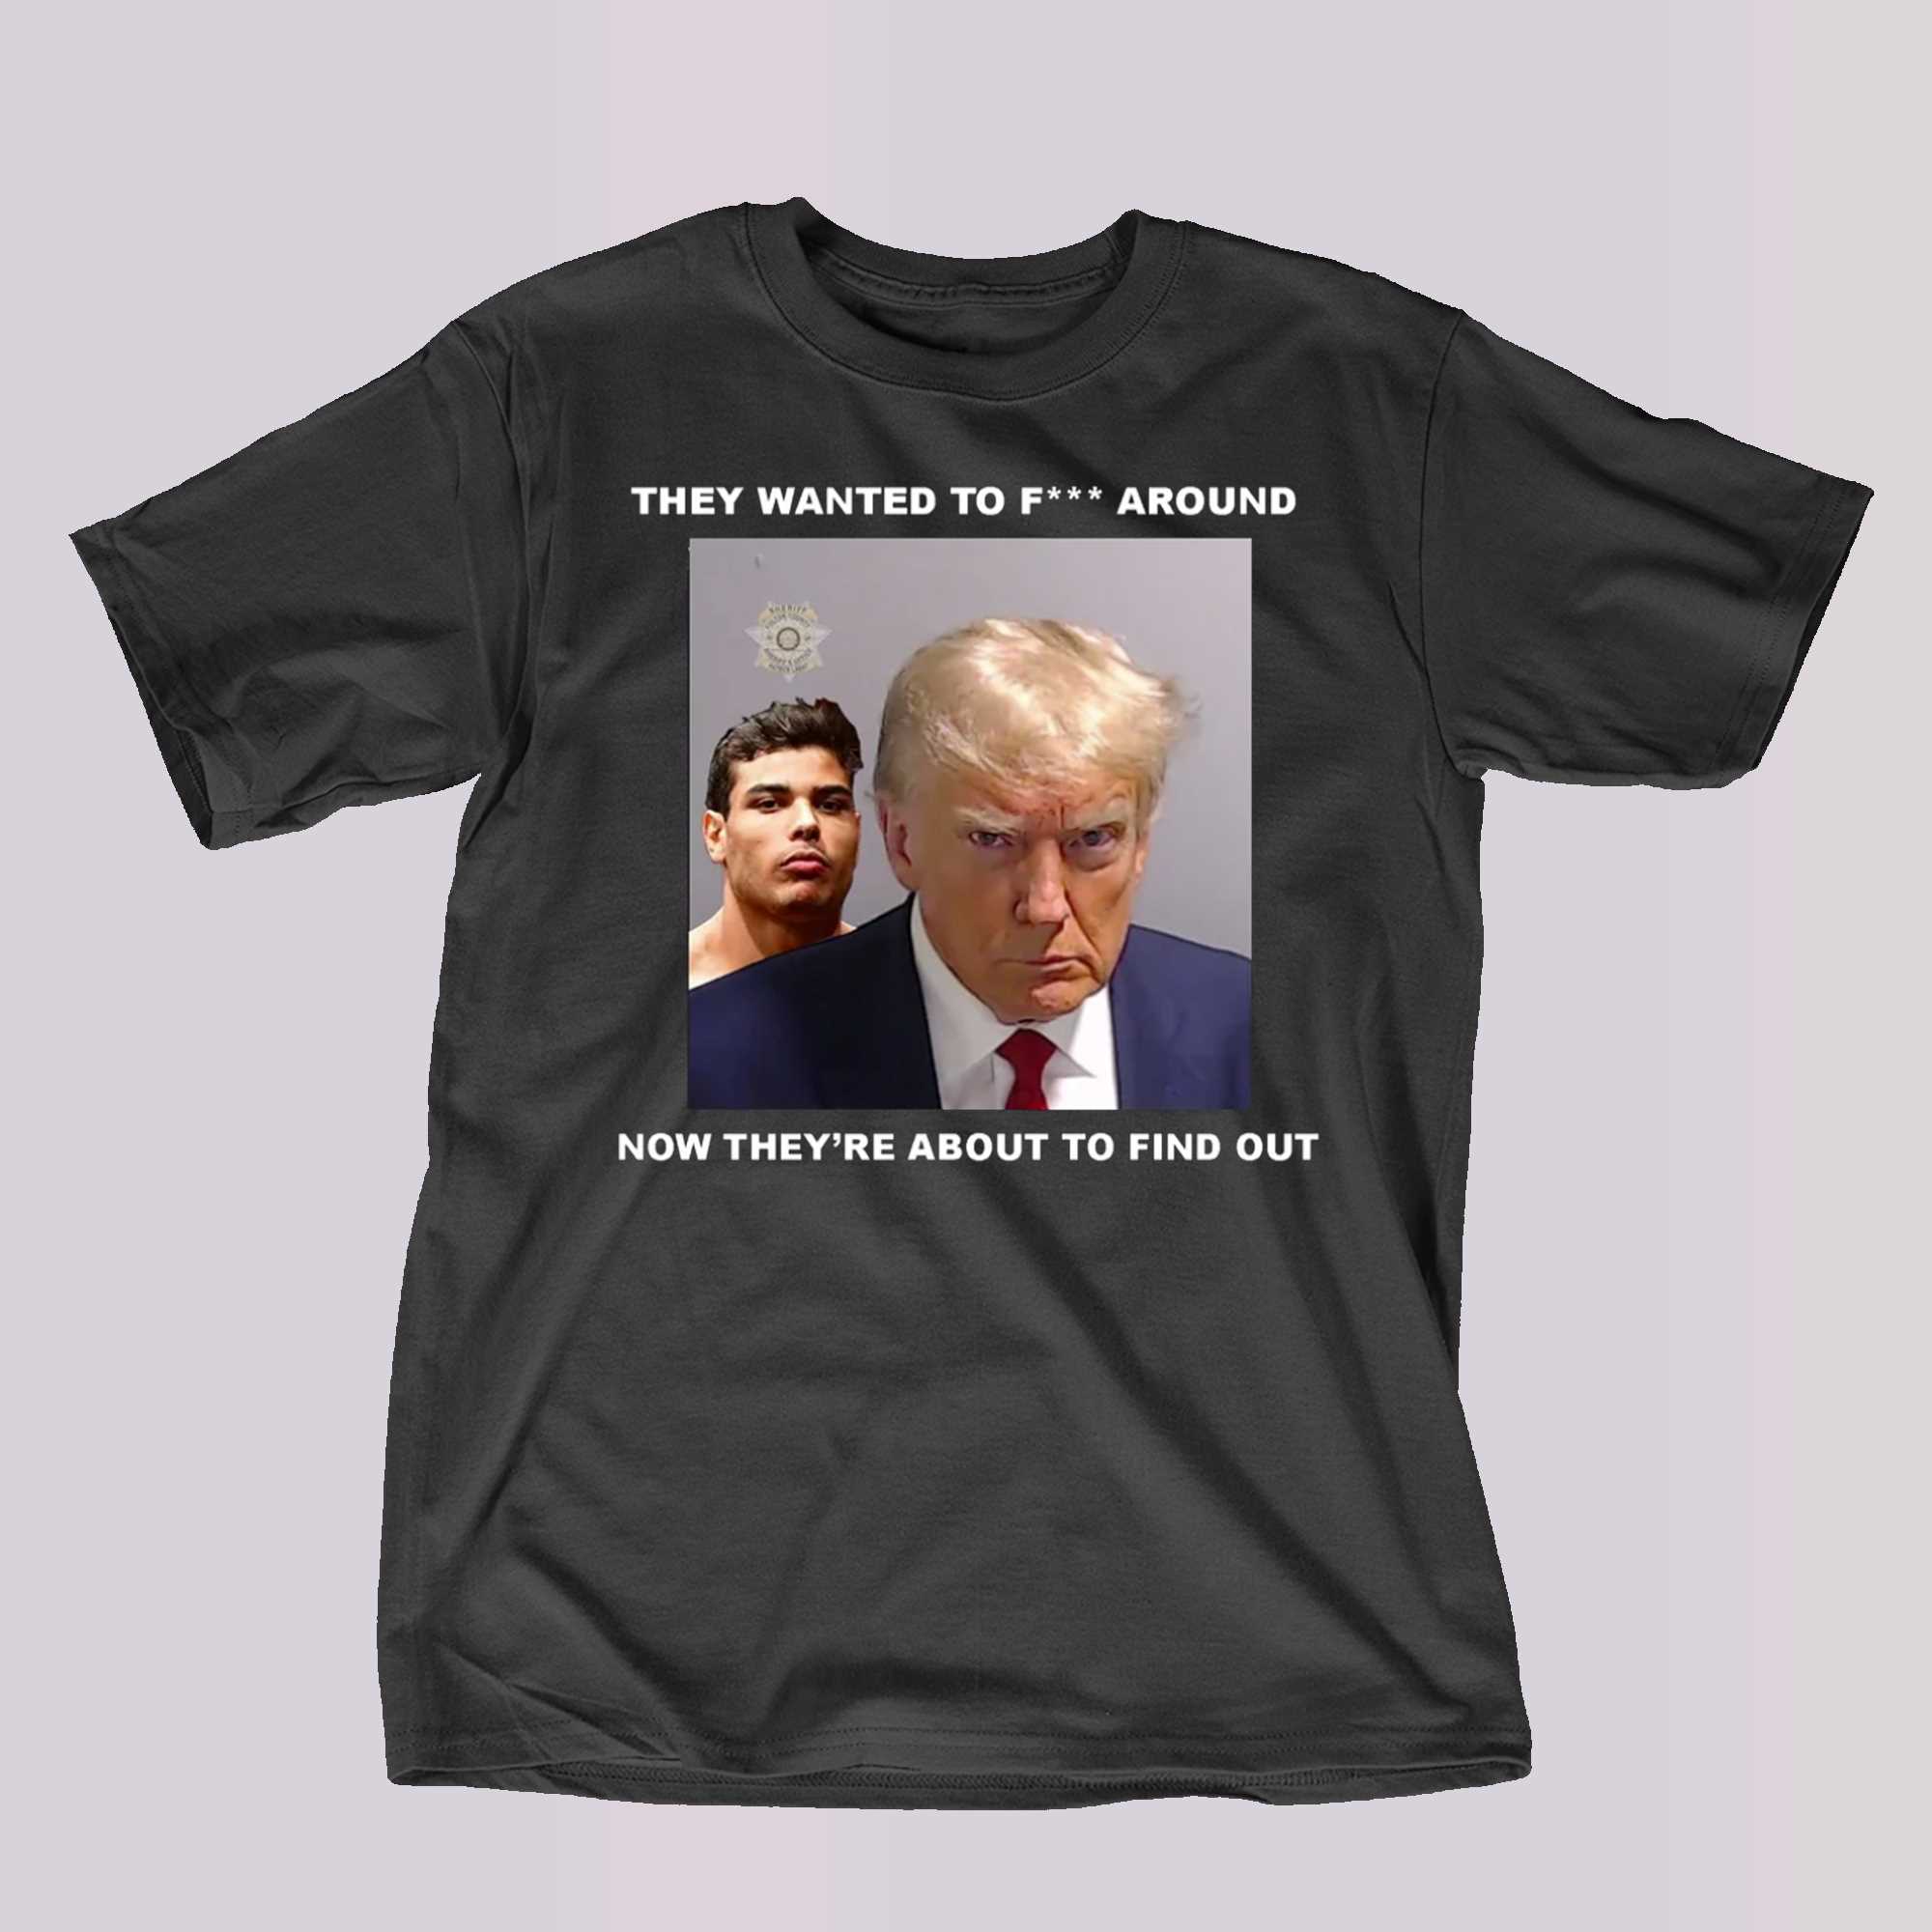 Eletees Travis Barker Famous People Suck Shirt